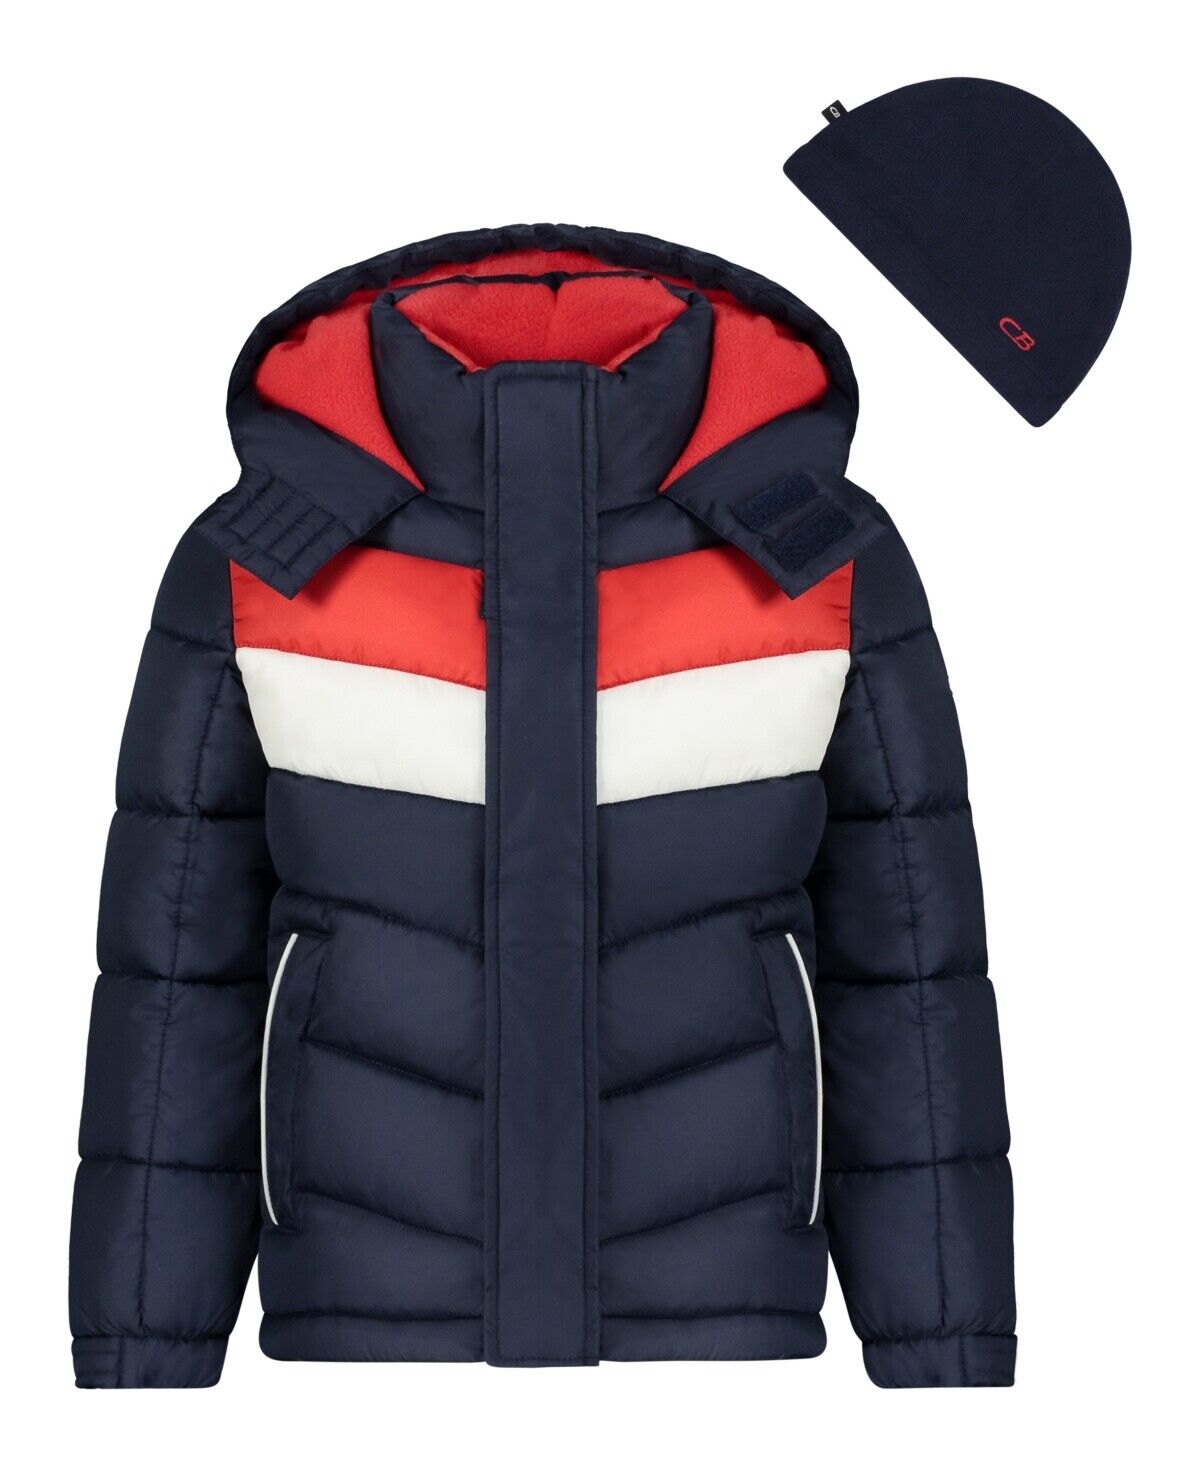 CB Sports Little Boys Puffer Jacket - Navy/red/white 7